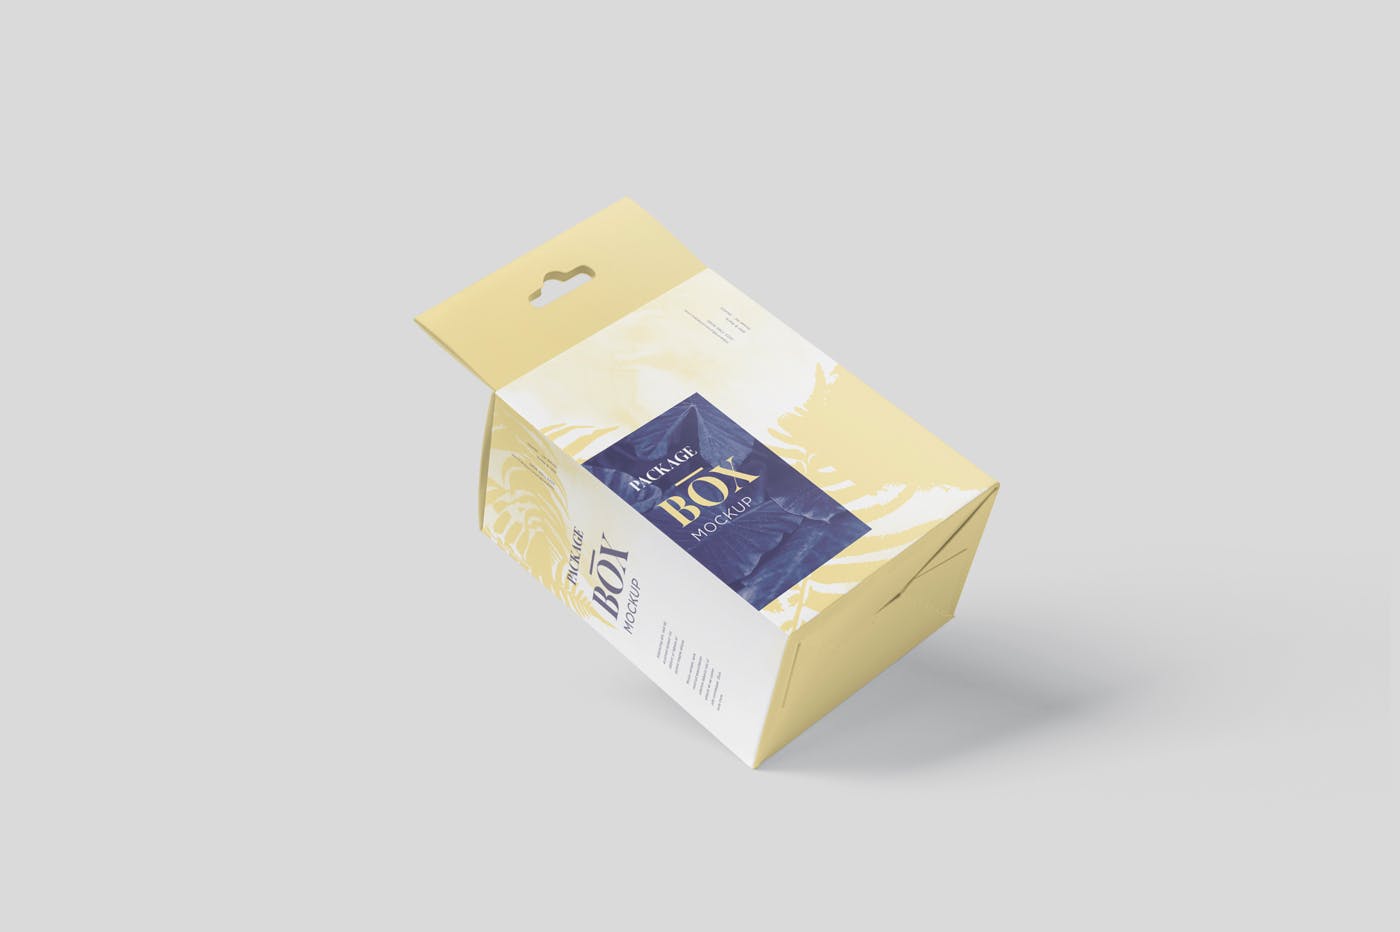 挂耳式扁平矩形包装盒第一素材精选模板 Package Box Mockup Set – Slim Square with Hanger插图(3)